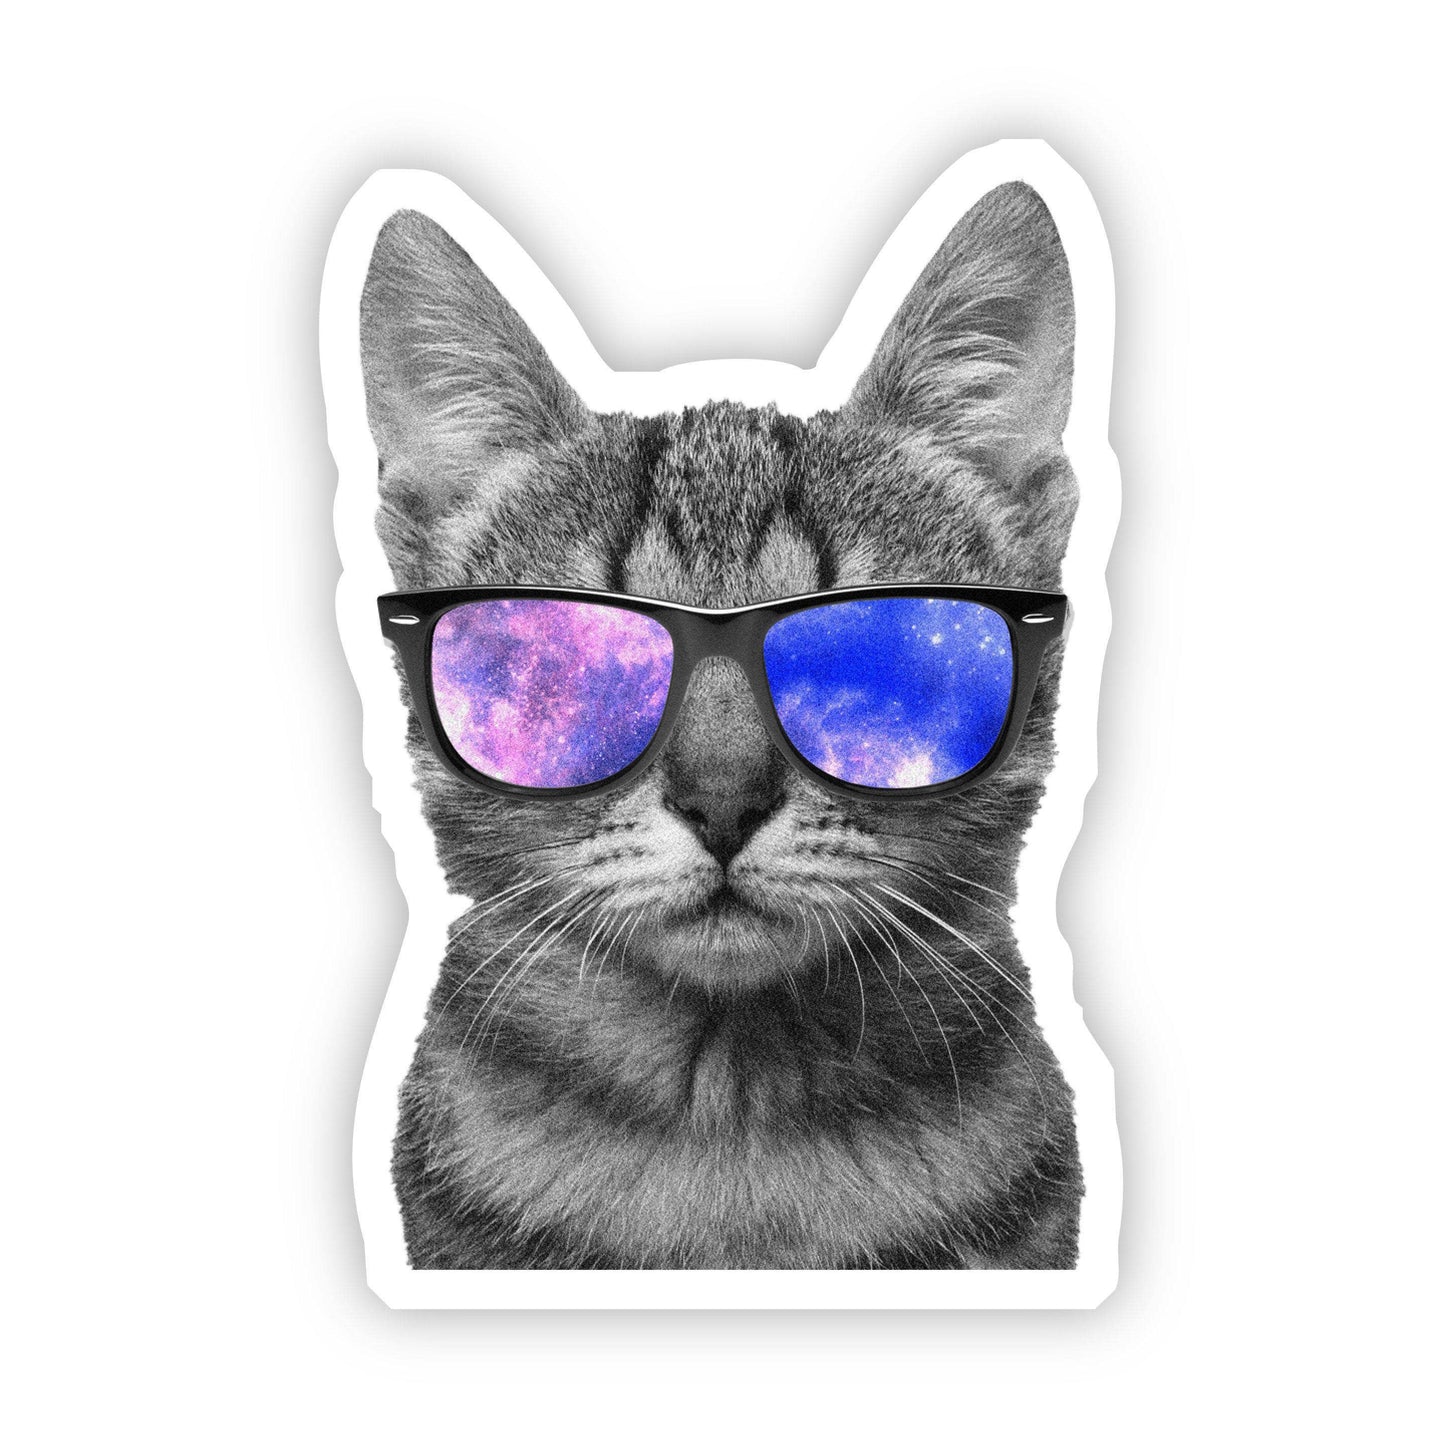 Sticker-Cat-14: Cat Sunglasses